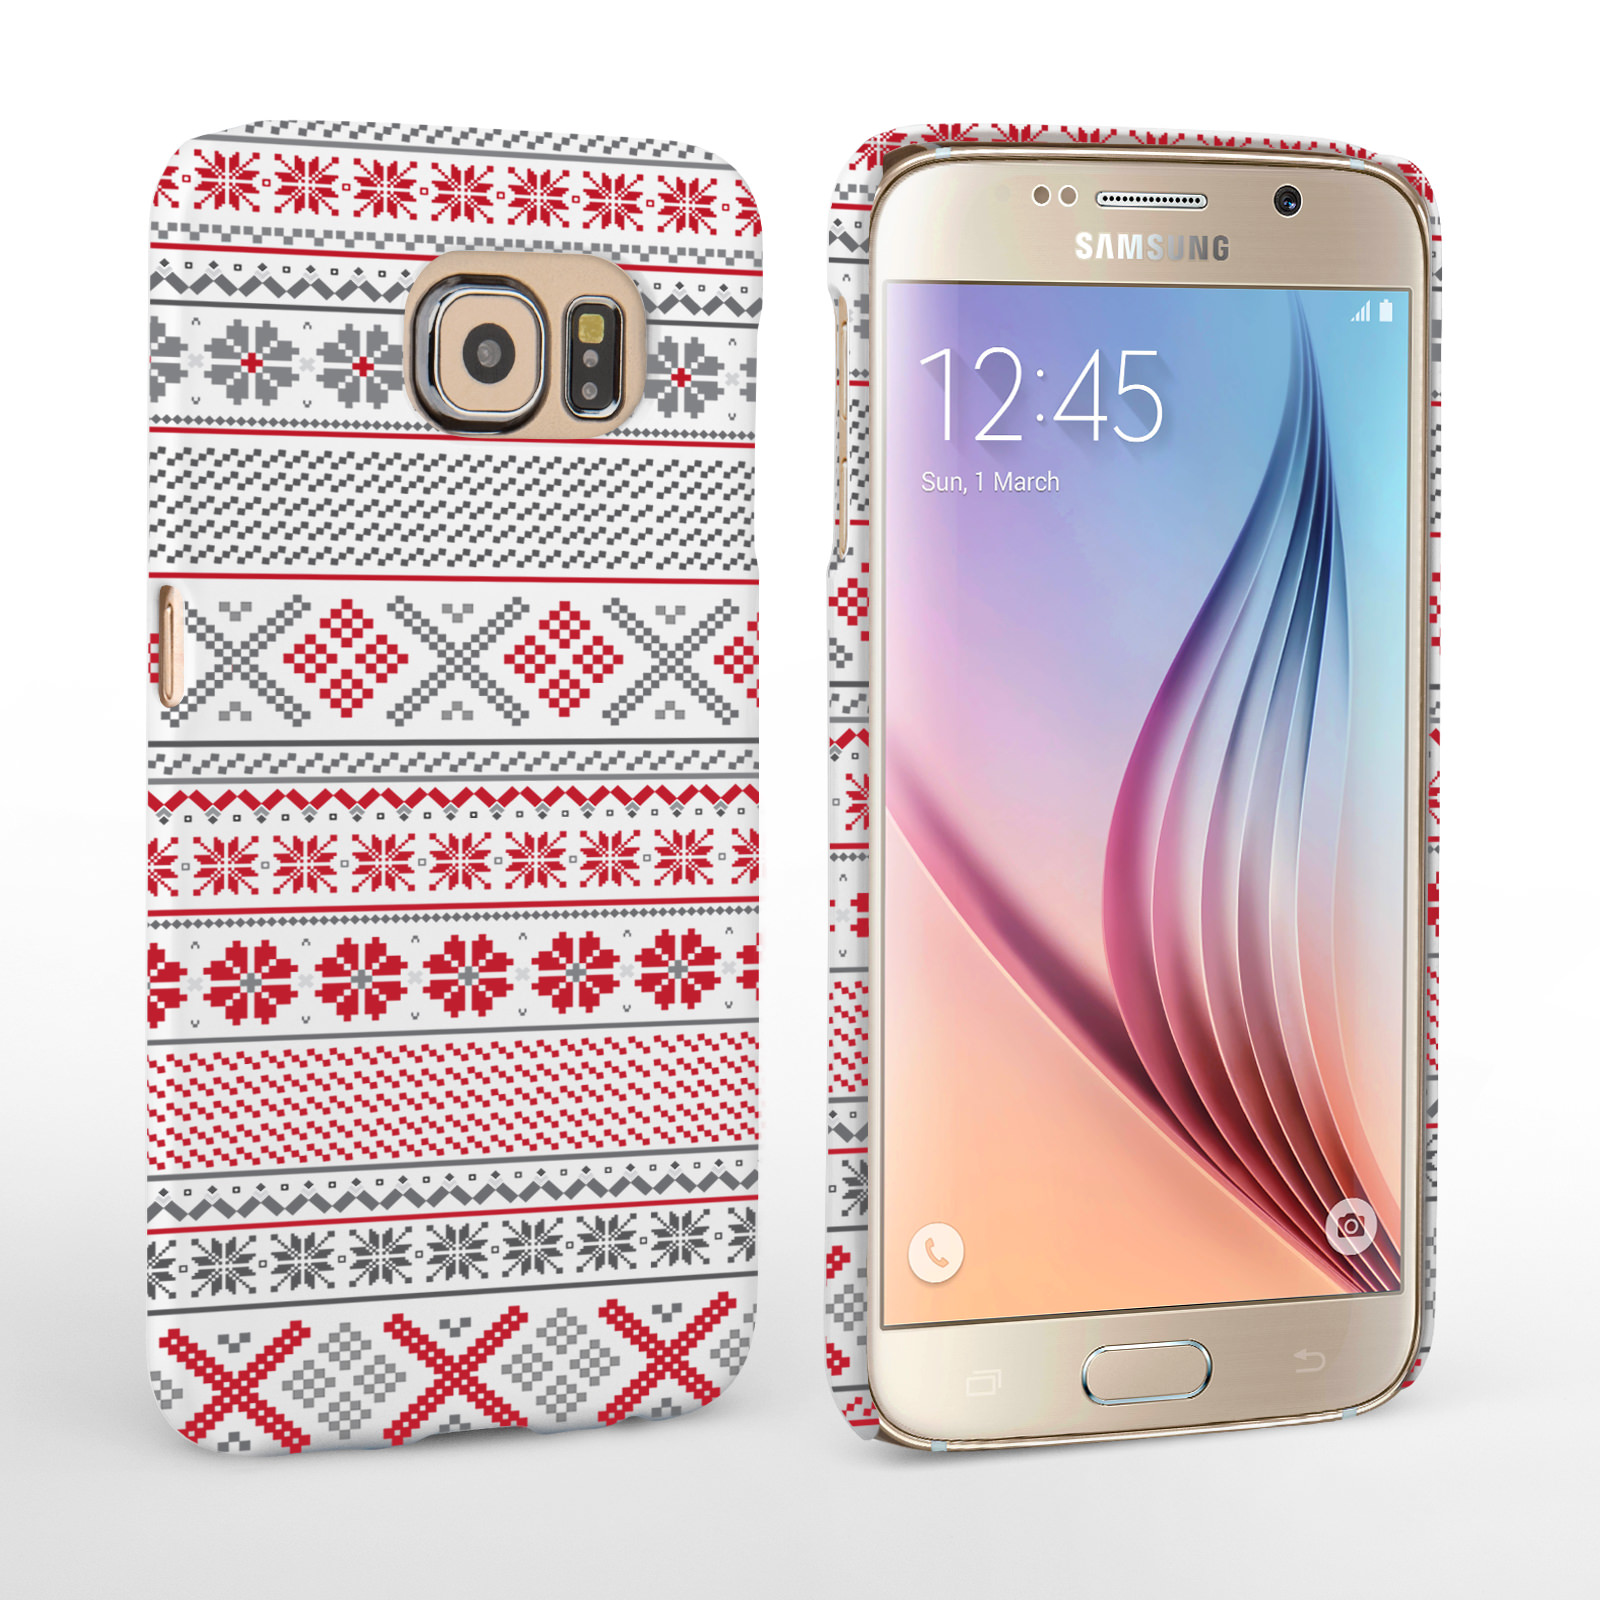 Caseflex Samsung Galaxy S6 Fairisle Case – Red, White and Grey